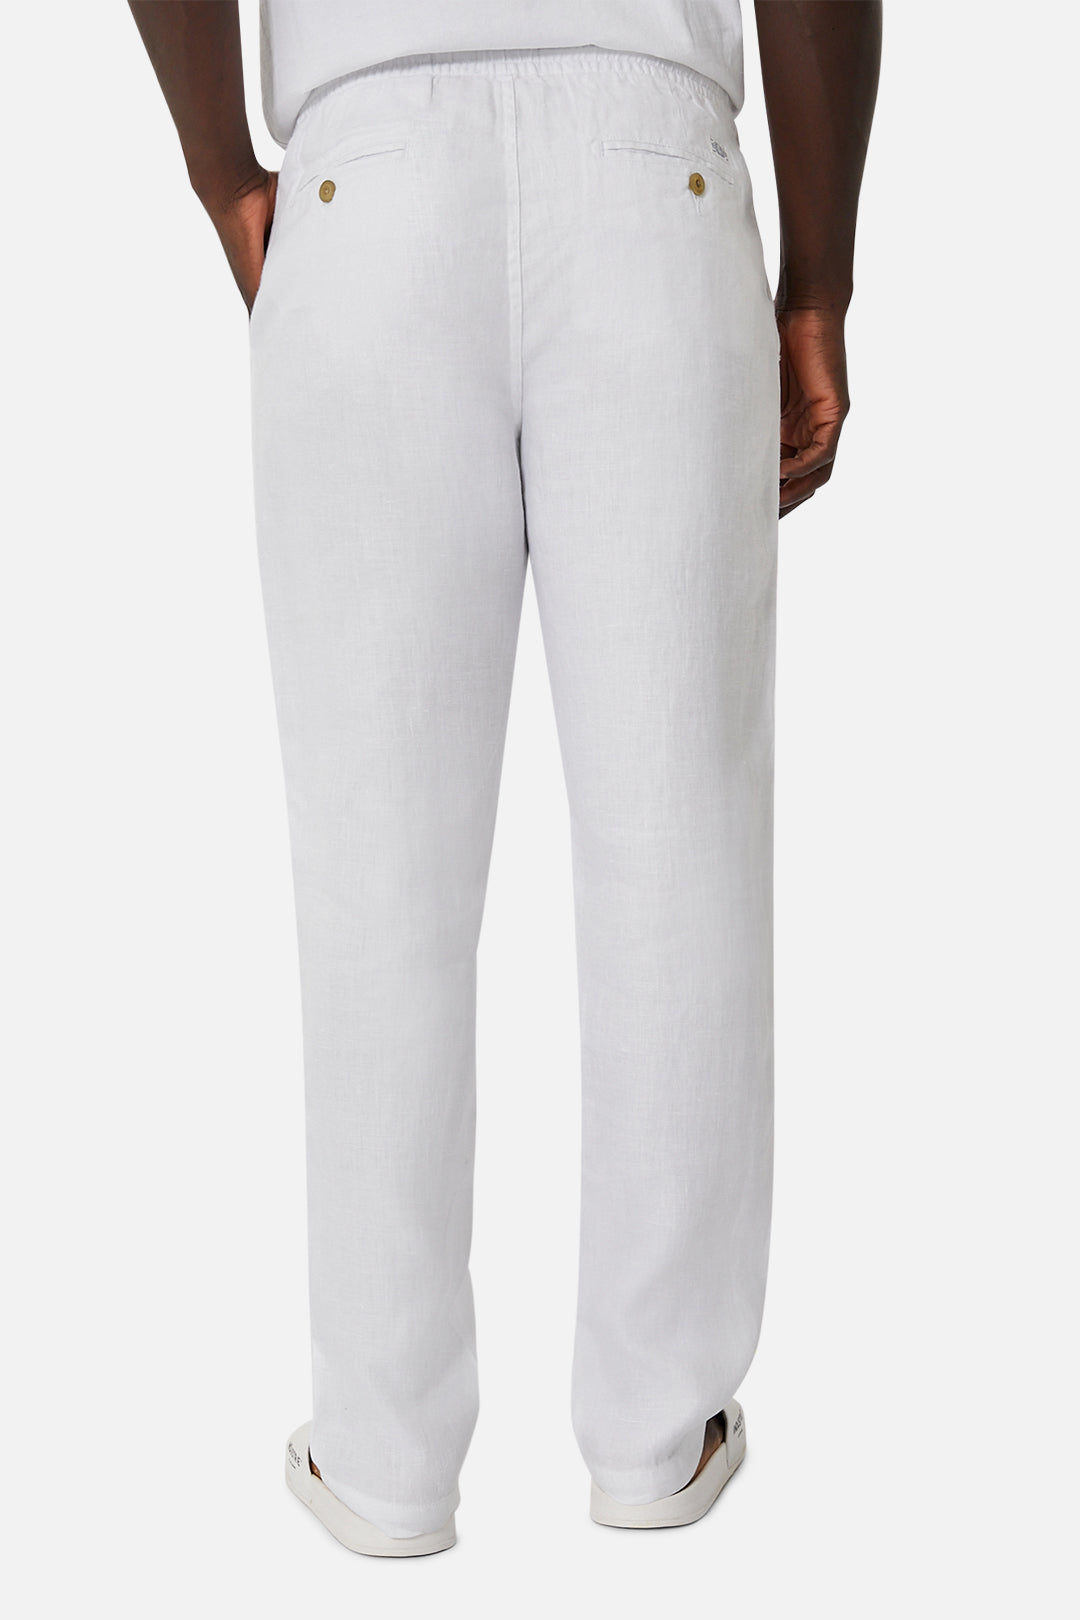 Men's Linen Pants Summer Pants Beach Pants Capri Pants Drawstring Elastic  Waist Plain Comfort Breathable Calf-